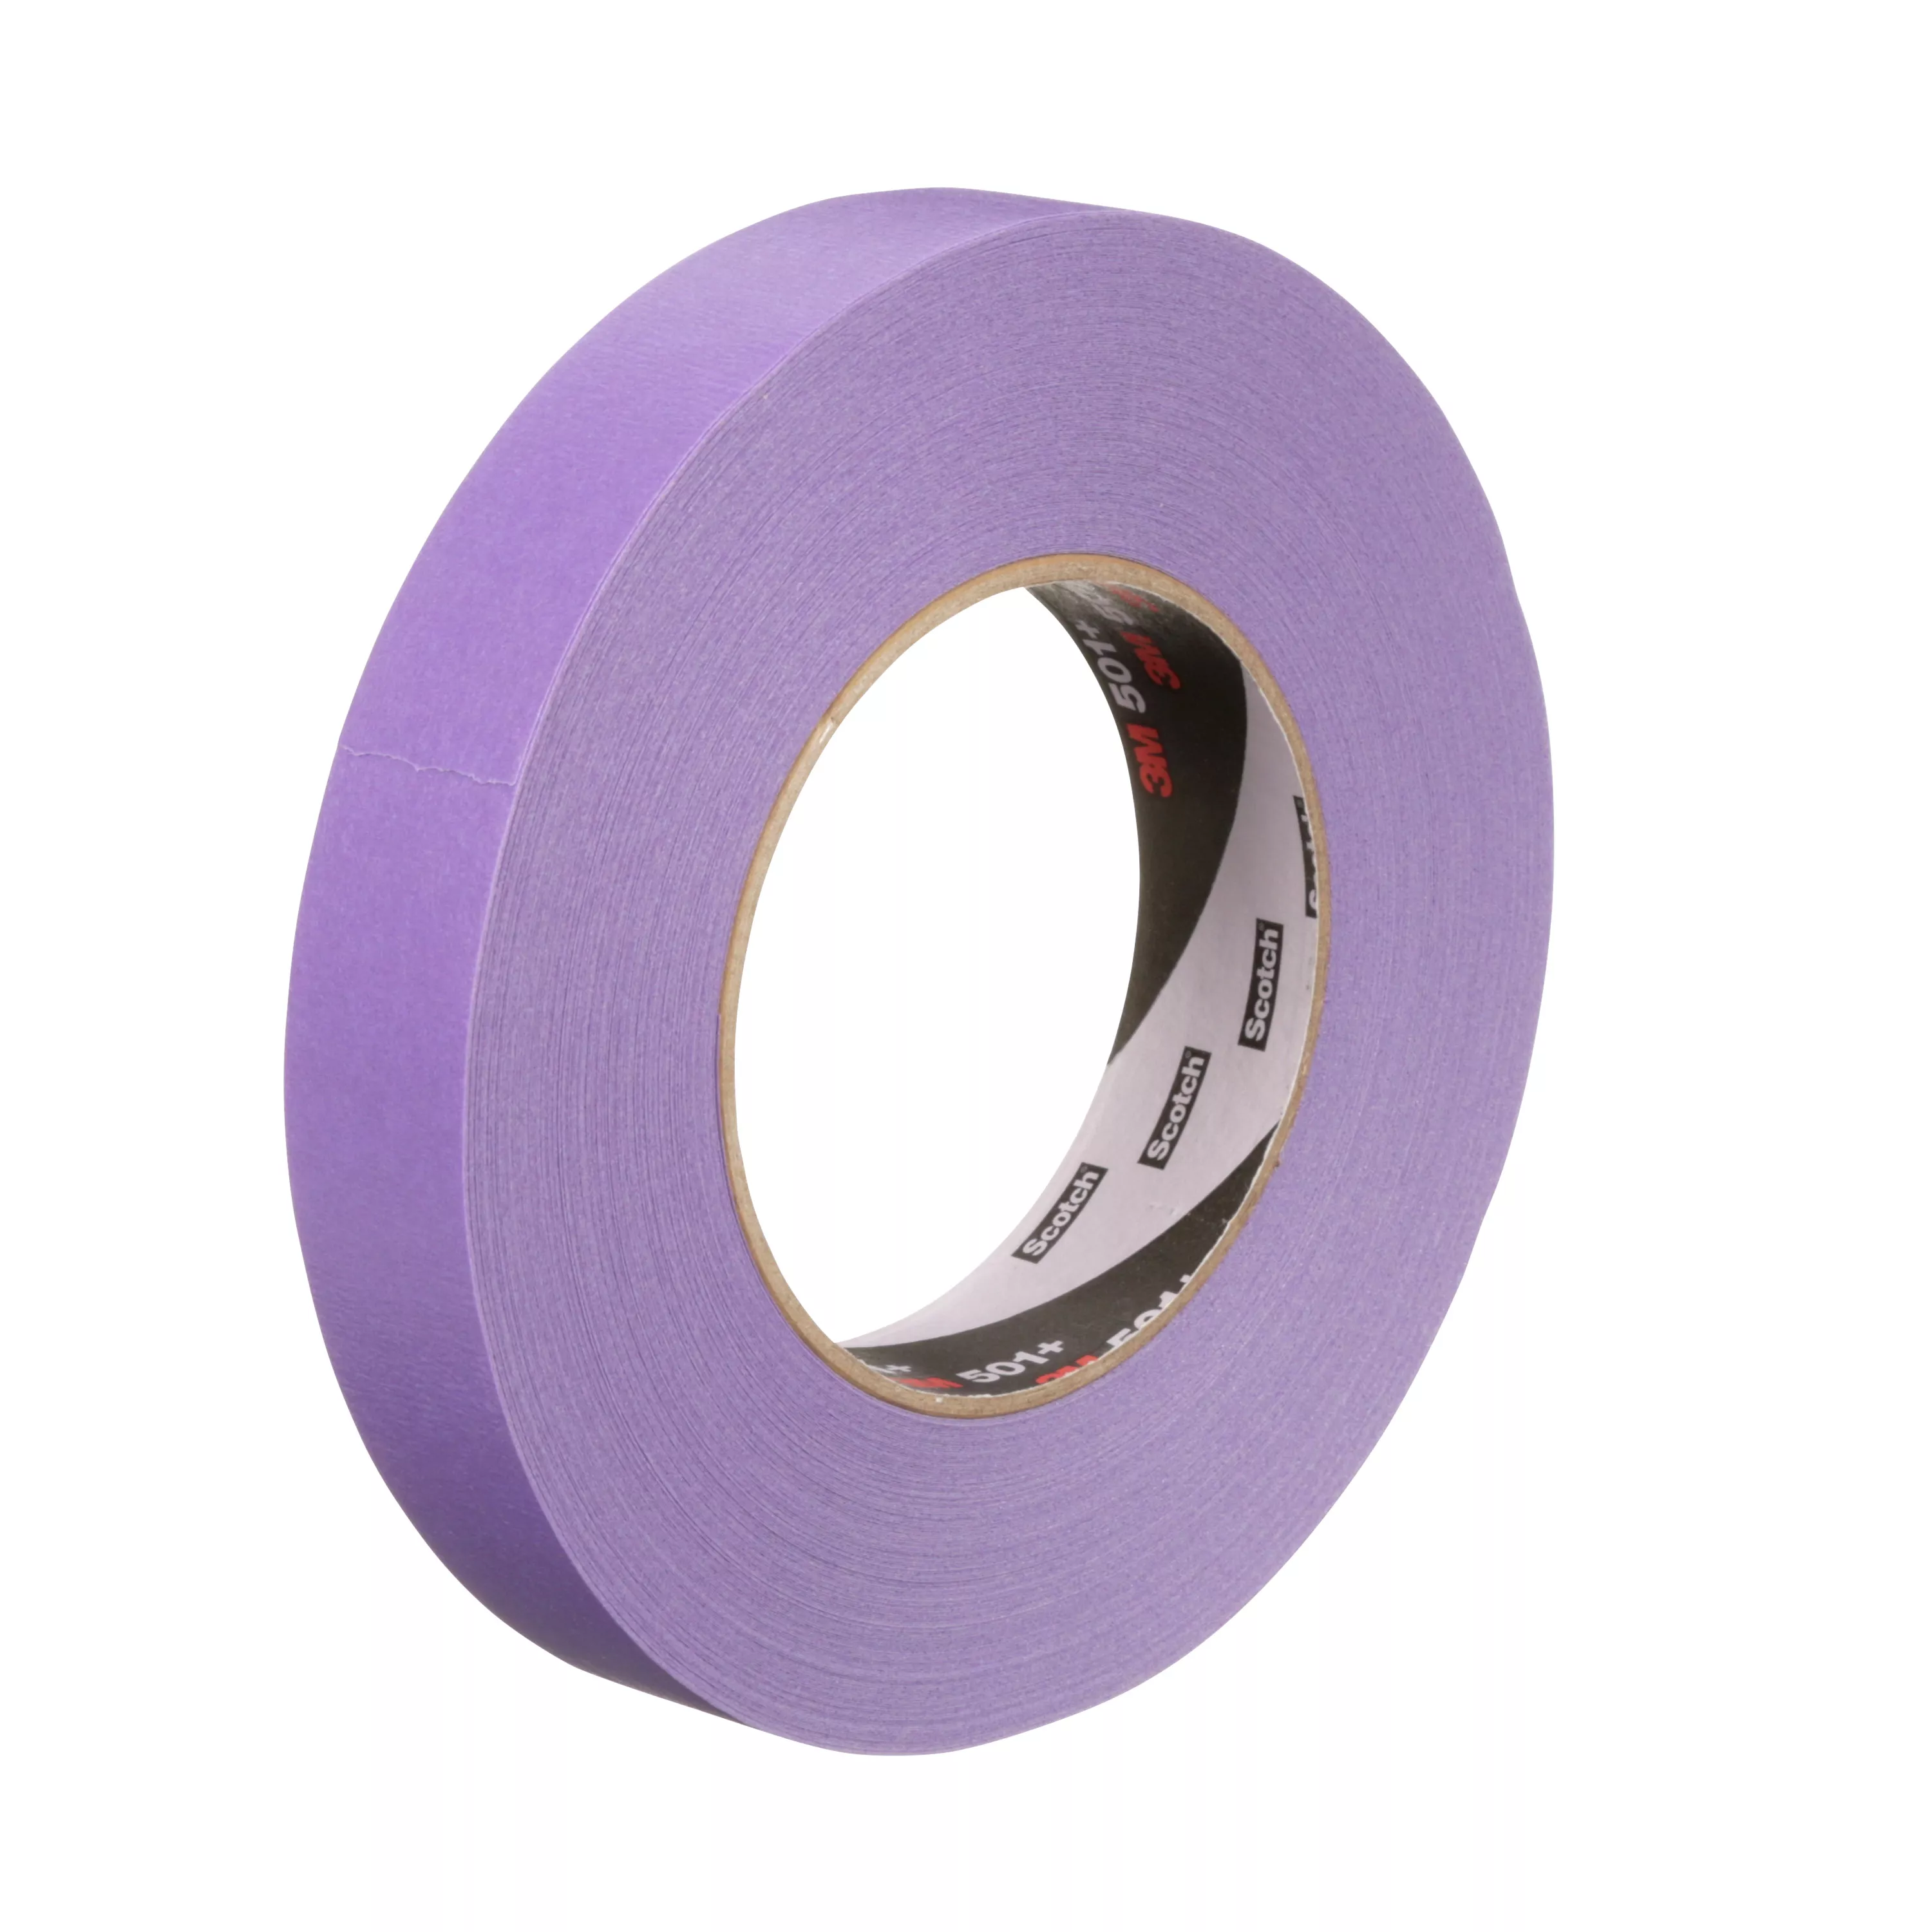 3M™ Specialty High Temperature Masking Tape 501+, Purple, 24 mm x 55
m,
 6.0 mil, 36 Rolls/Case